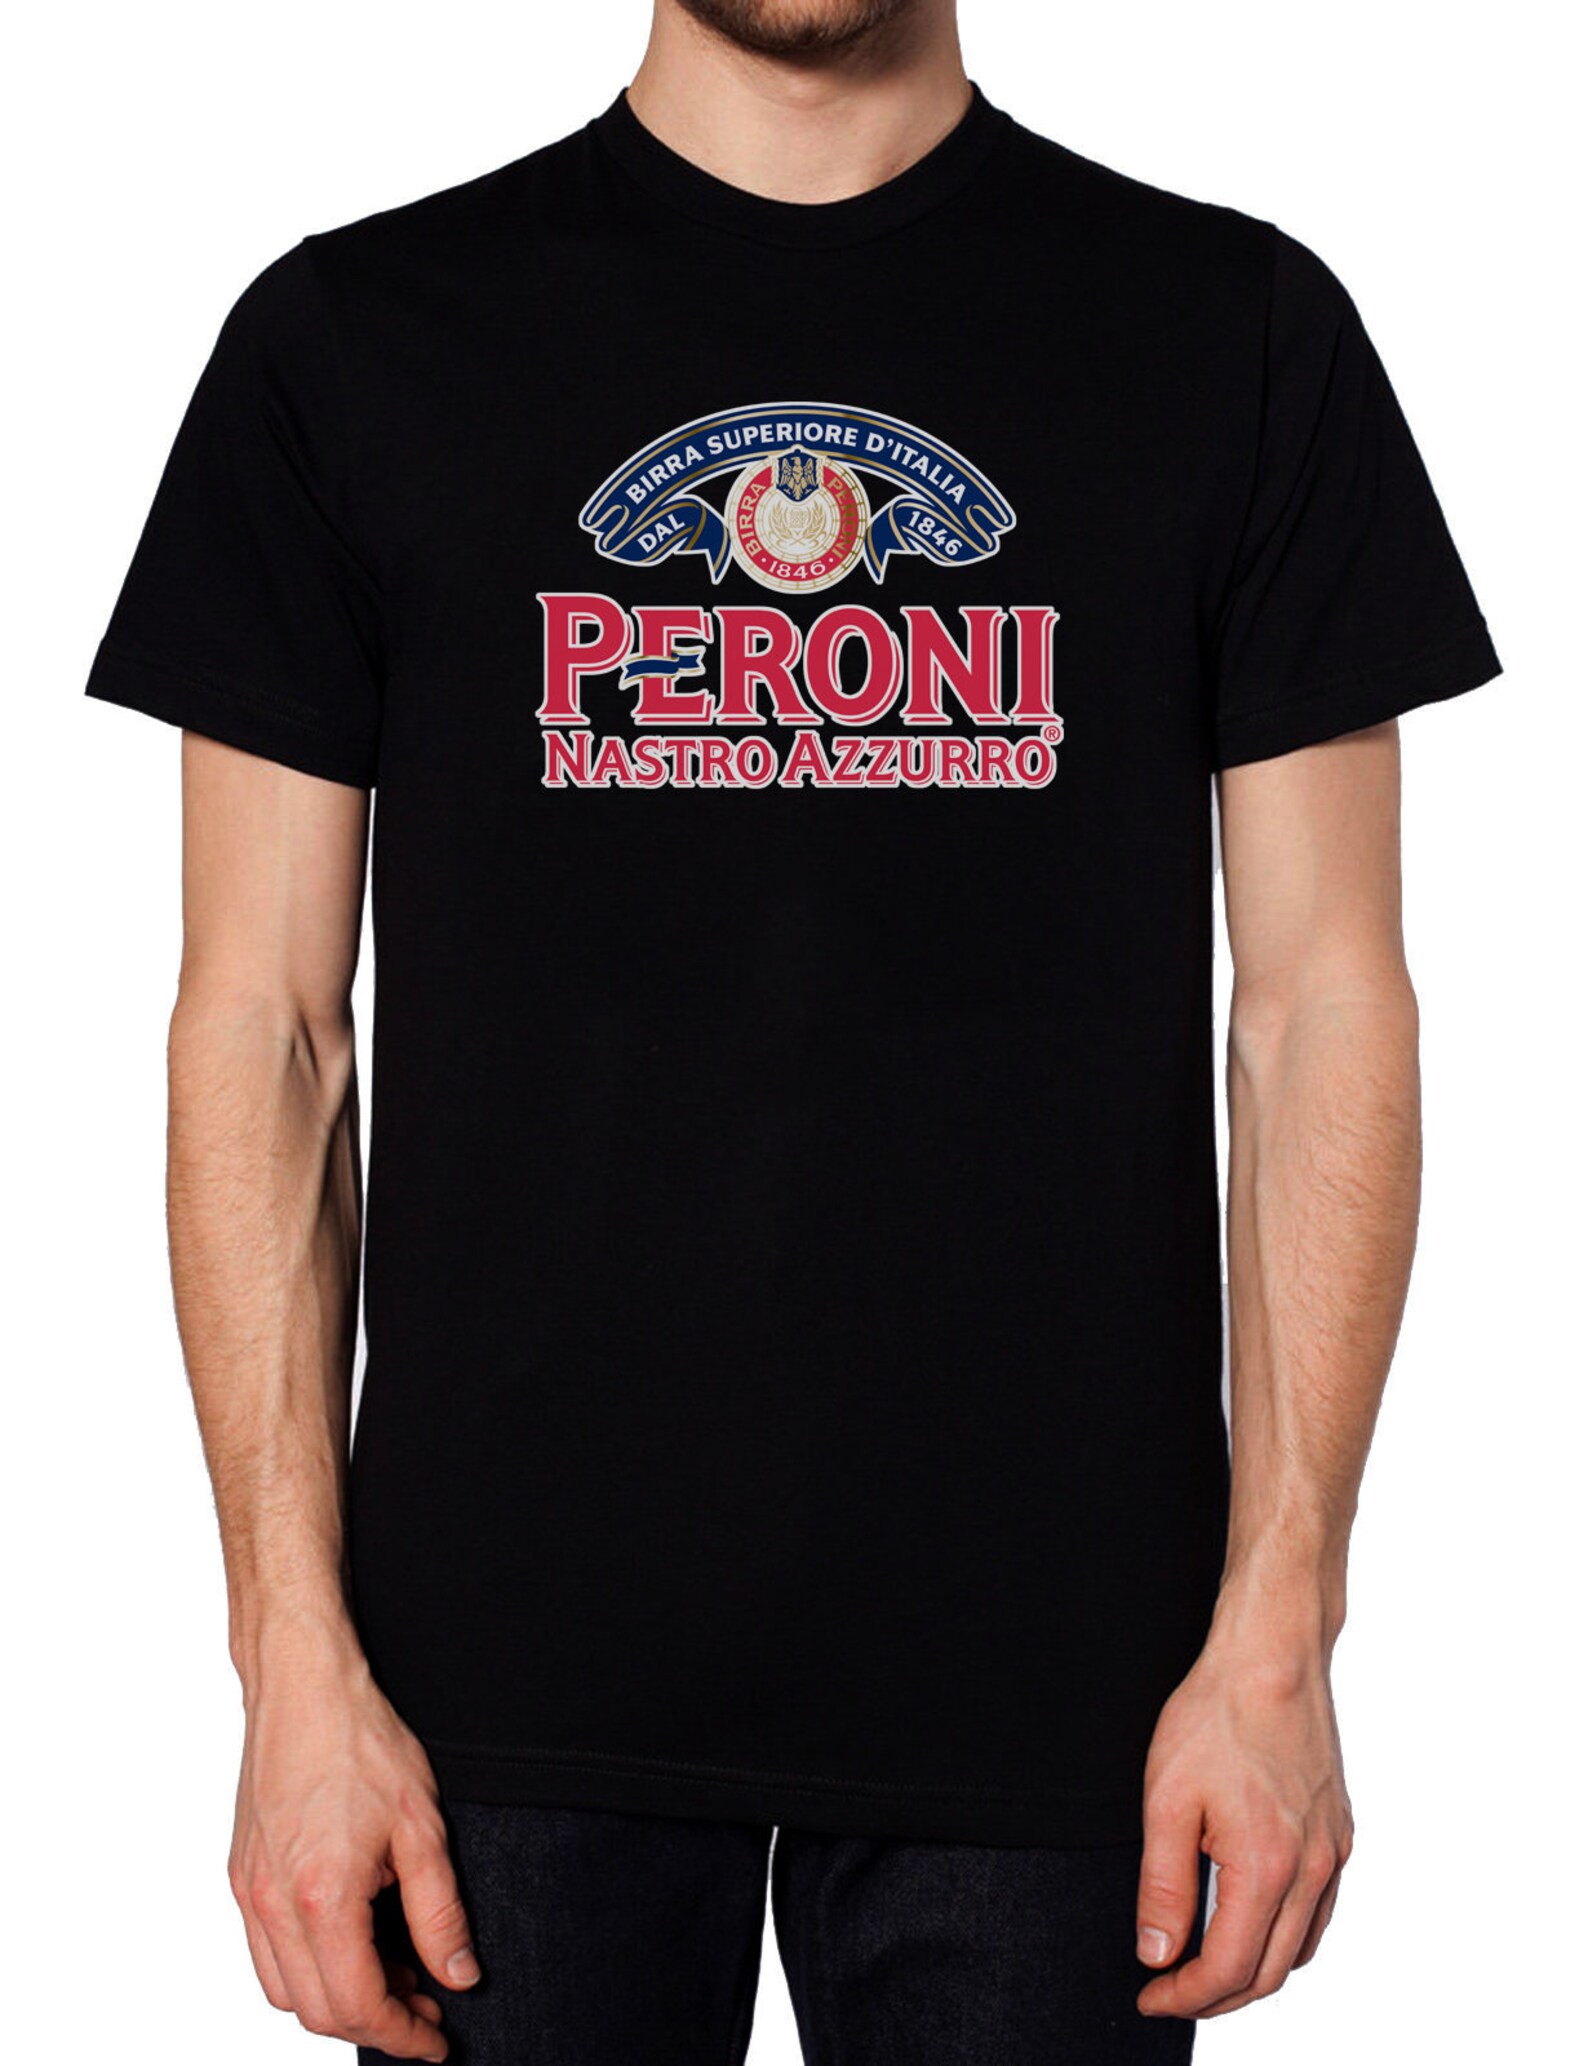 Peroni Nastro Azzurro T-shirt - Etsy